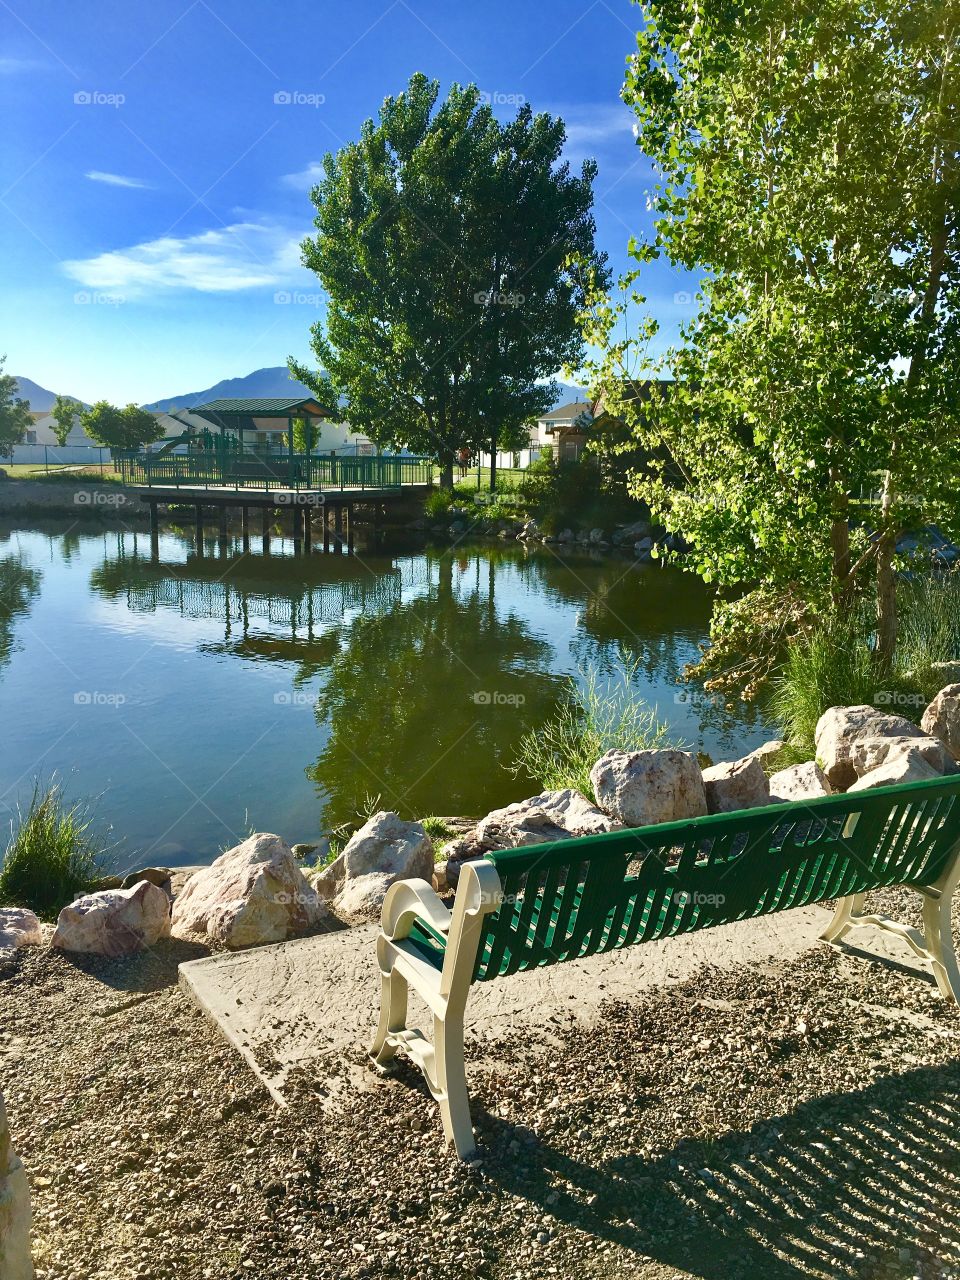 Neighborhood pond. Reflection. View. Tree. Bench. Beautiful view. Mountains.